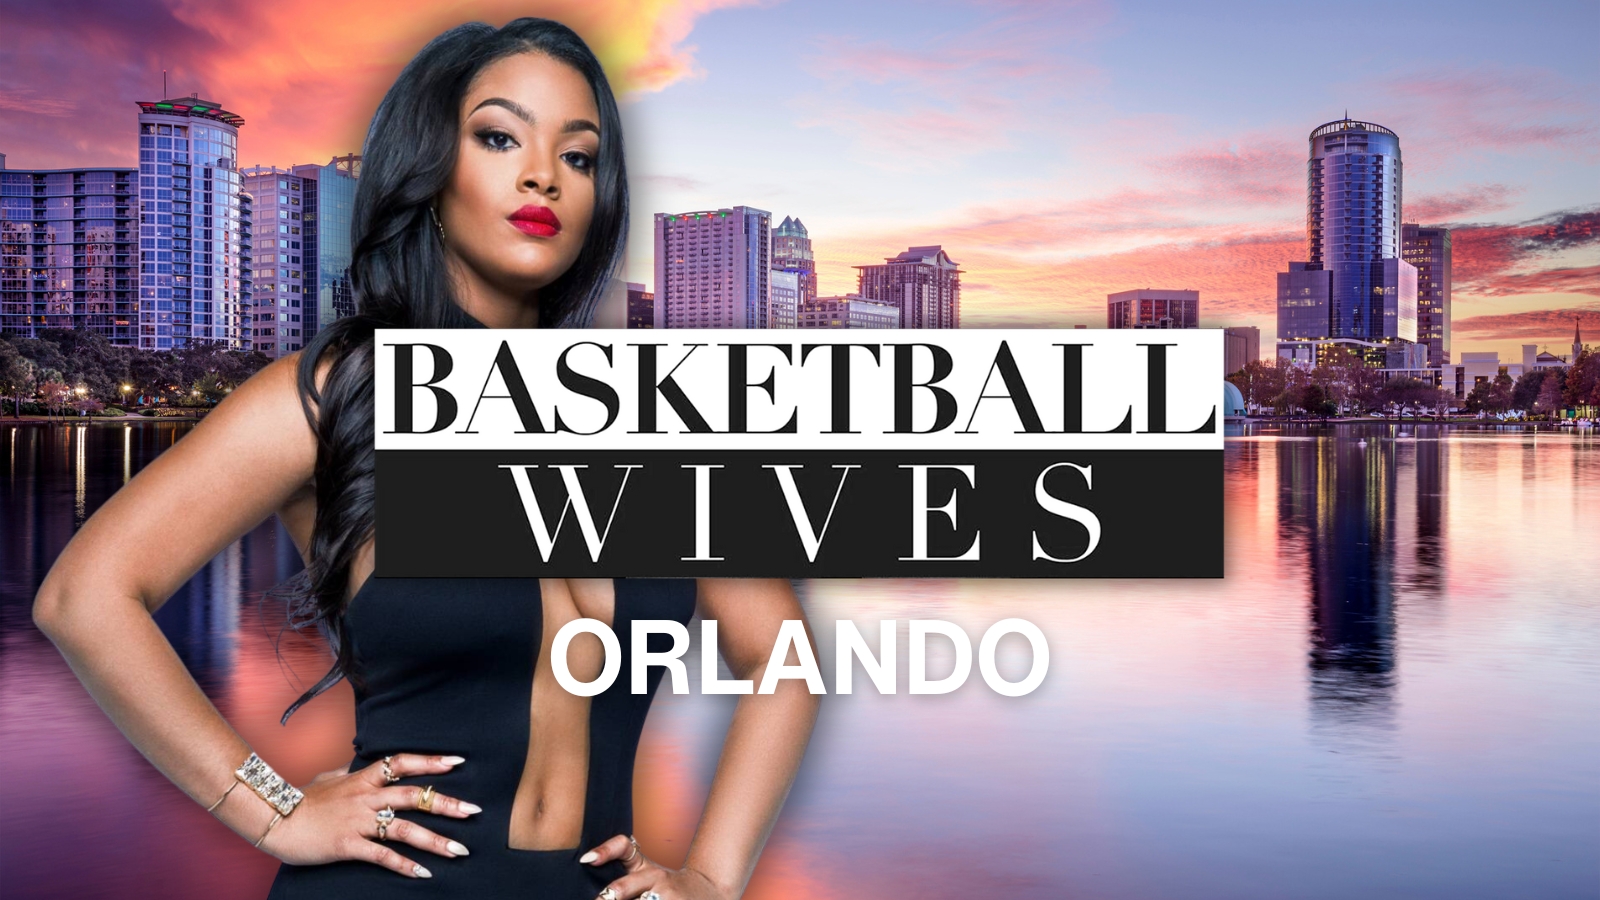 Basketball Wives Orlando, Mehgan James, Basketball Wives Season 11, VH1, Evelyn Lozada